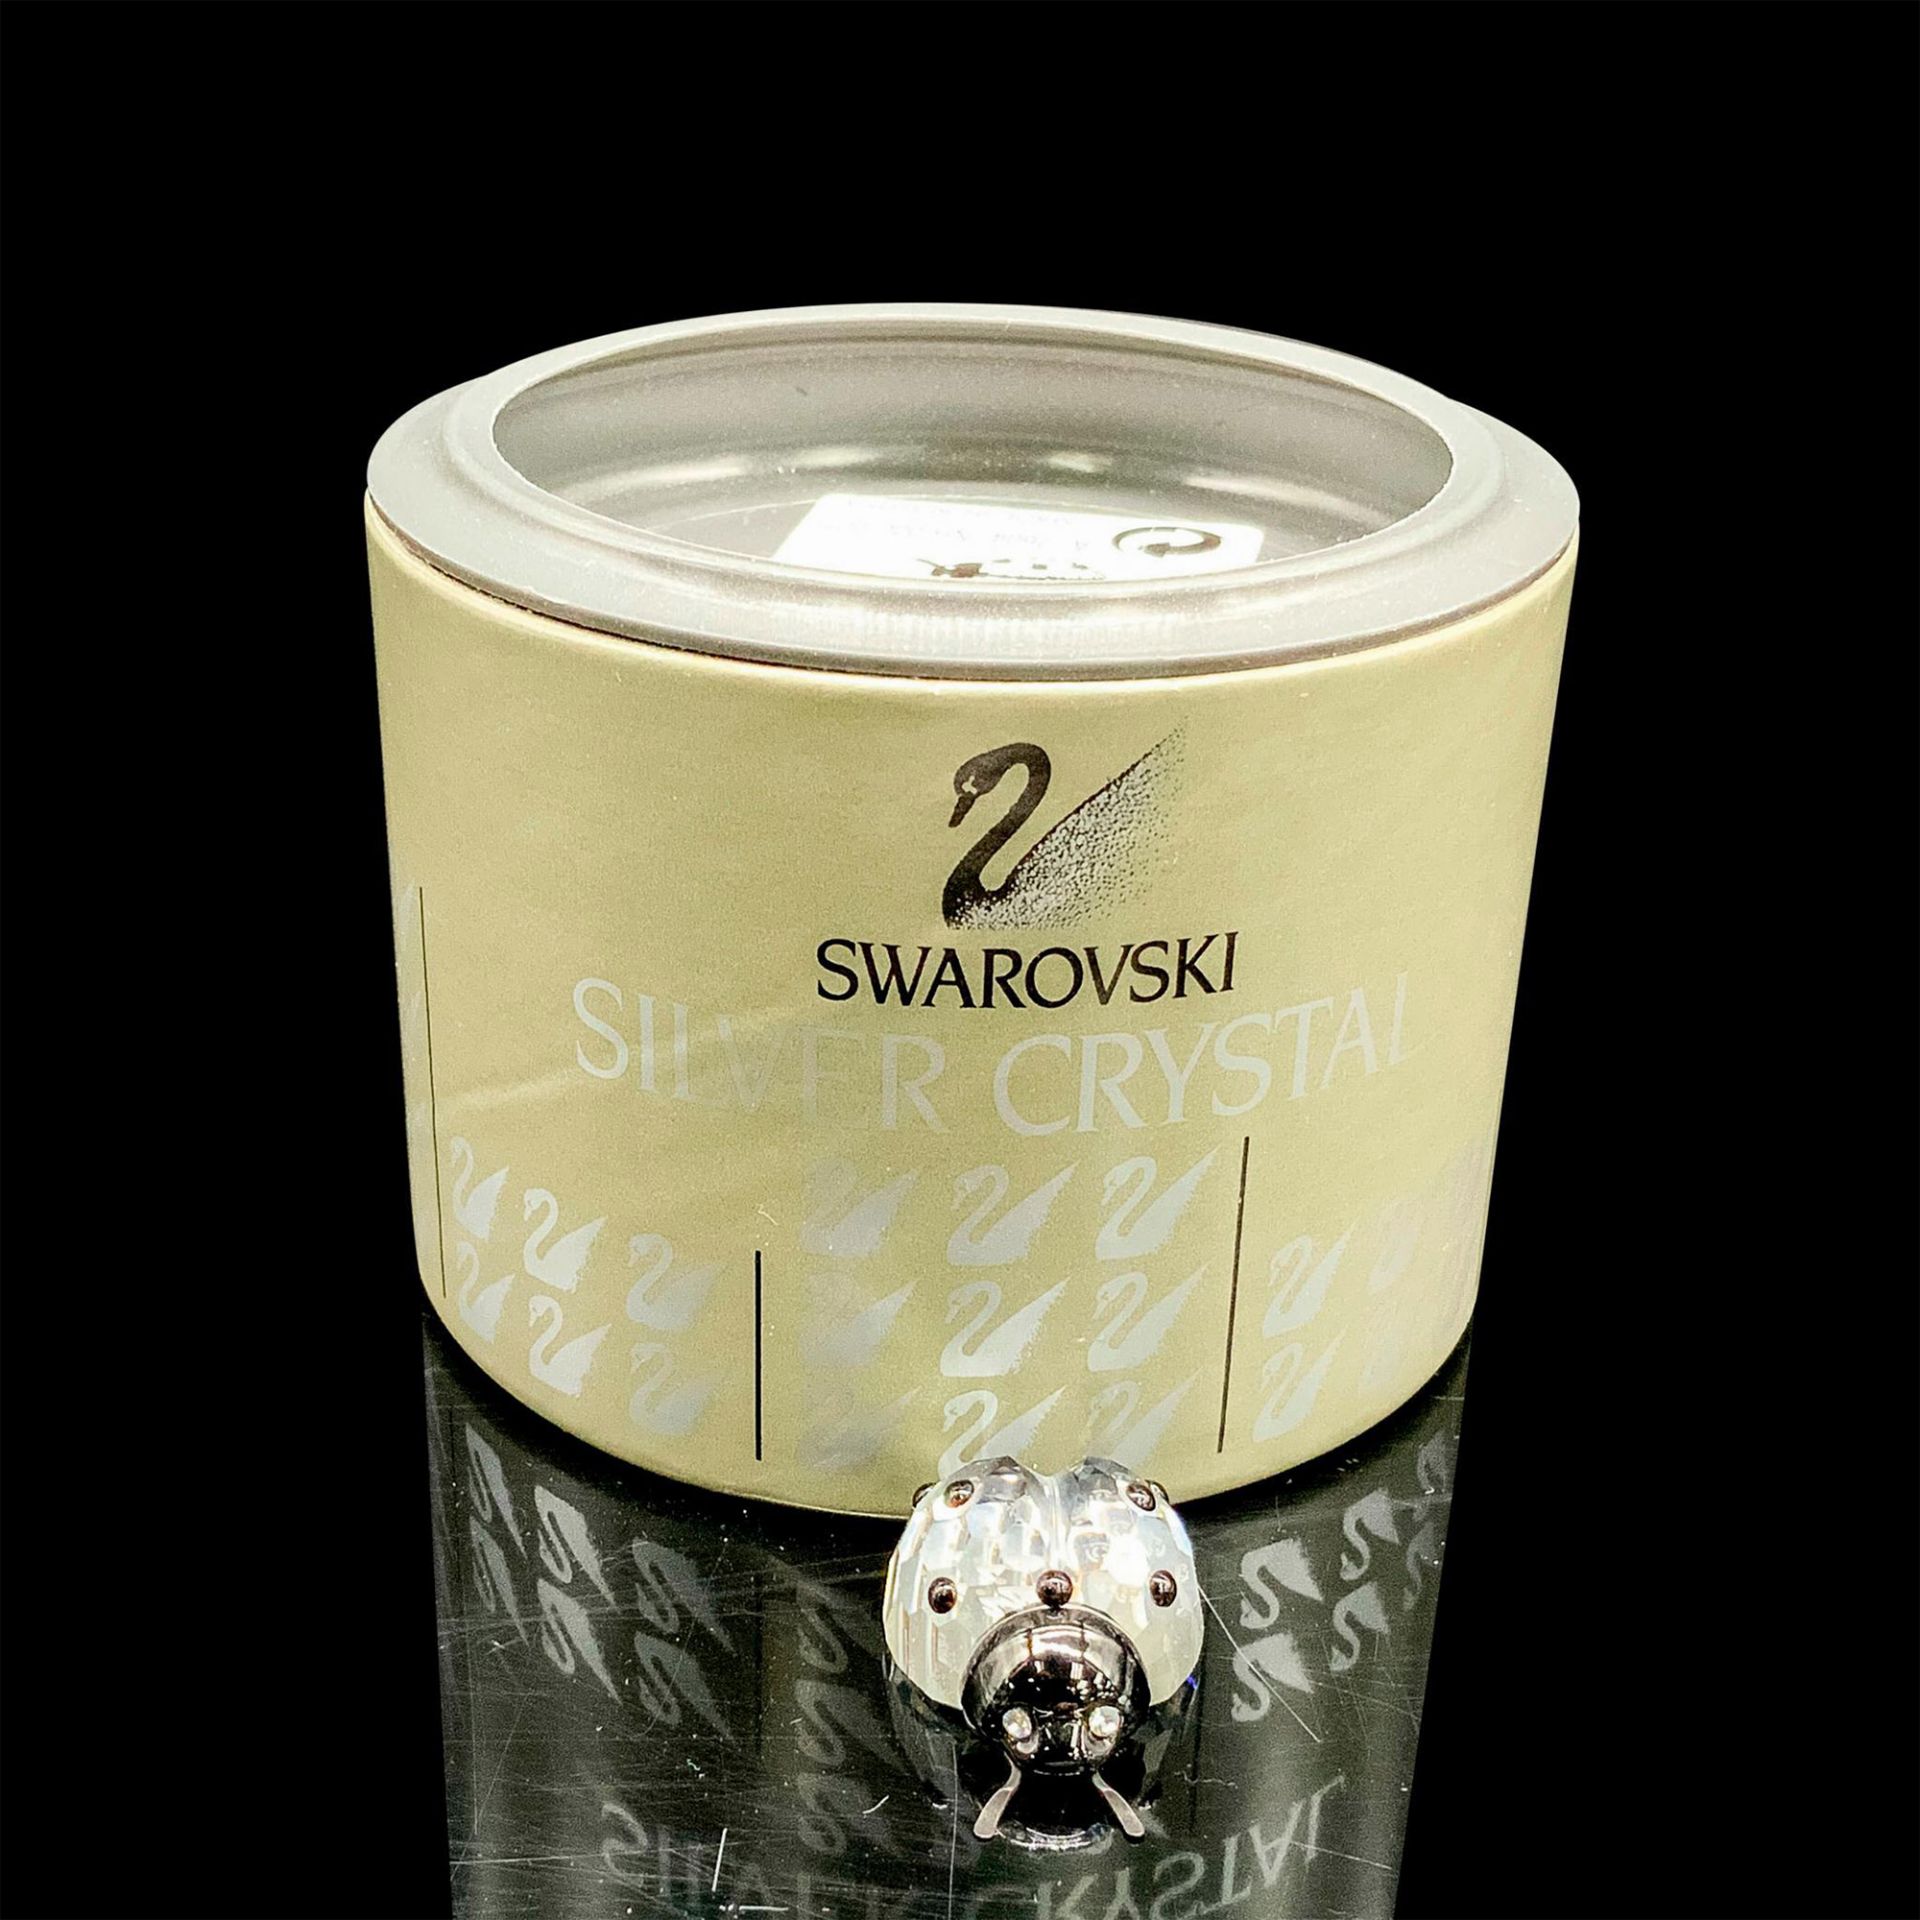 Swarovski Silver Crystal Figurine, Ladybug - Image 3 of 3